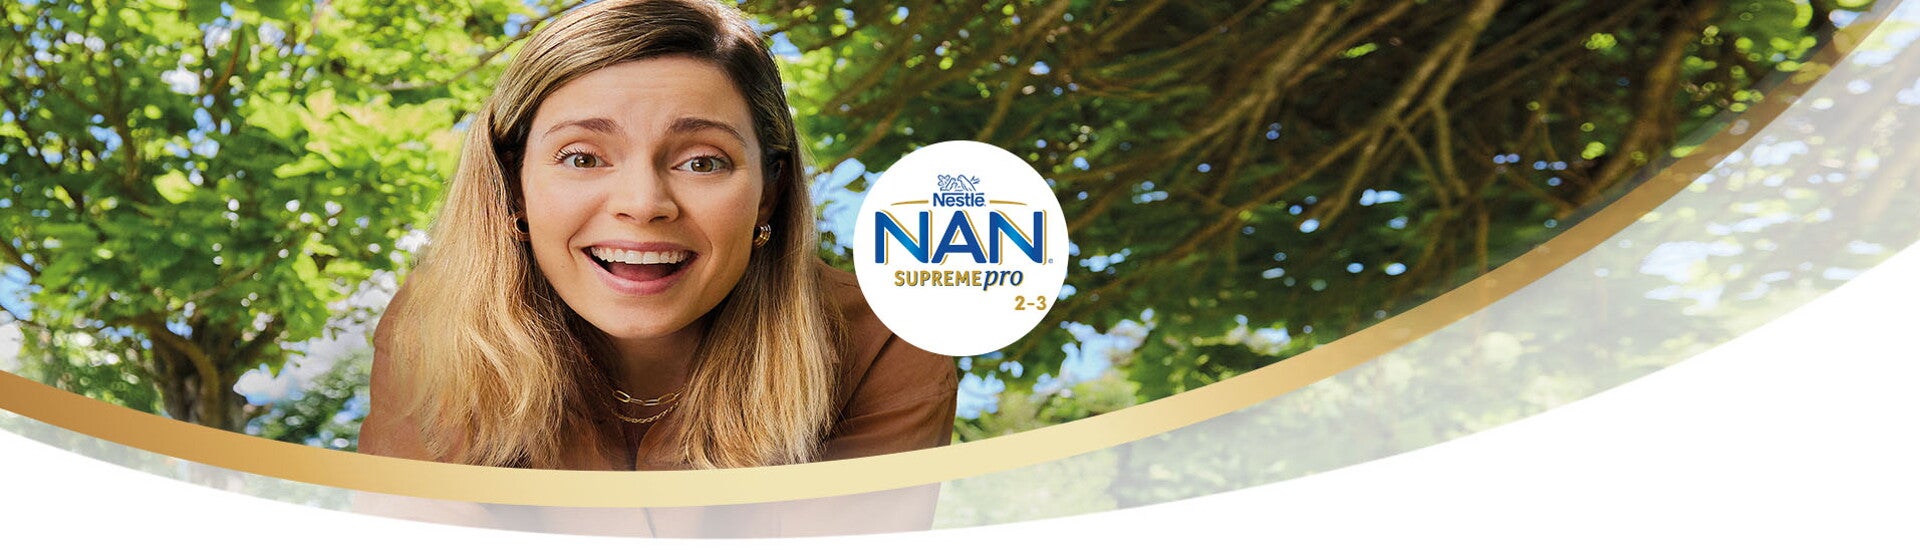 Nan Supremepro